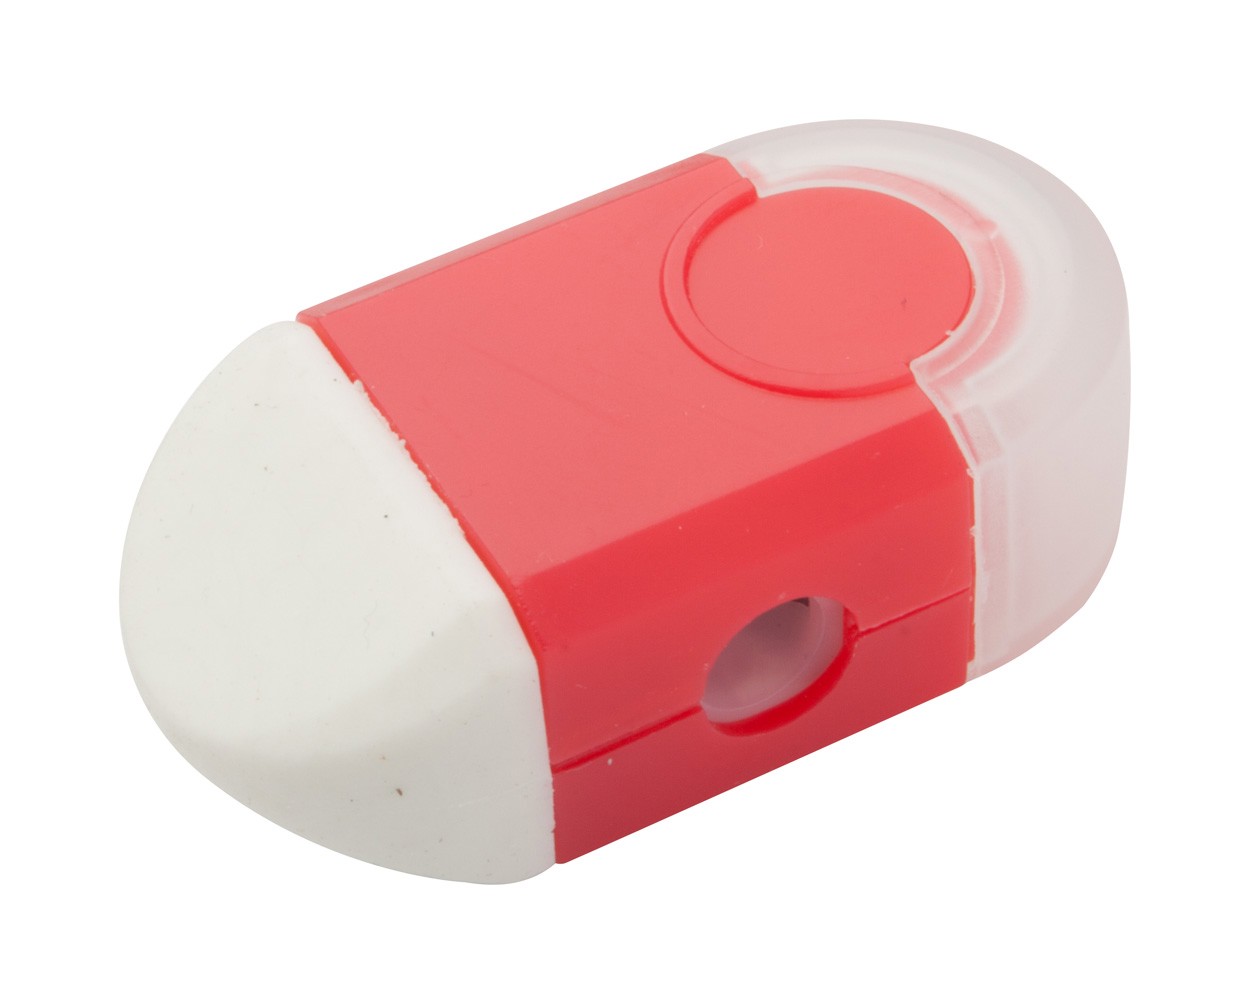 Eraser And Sharpener Cafey - Red / White